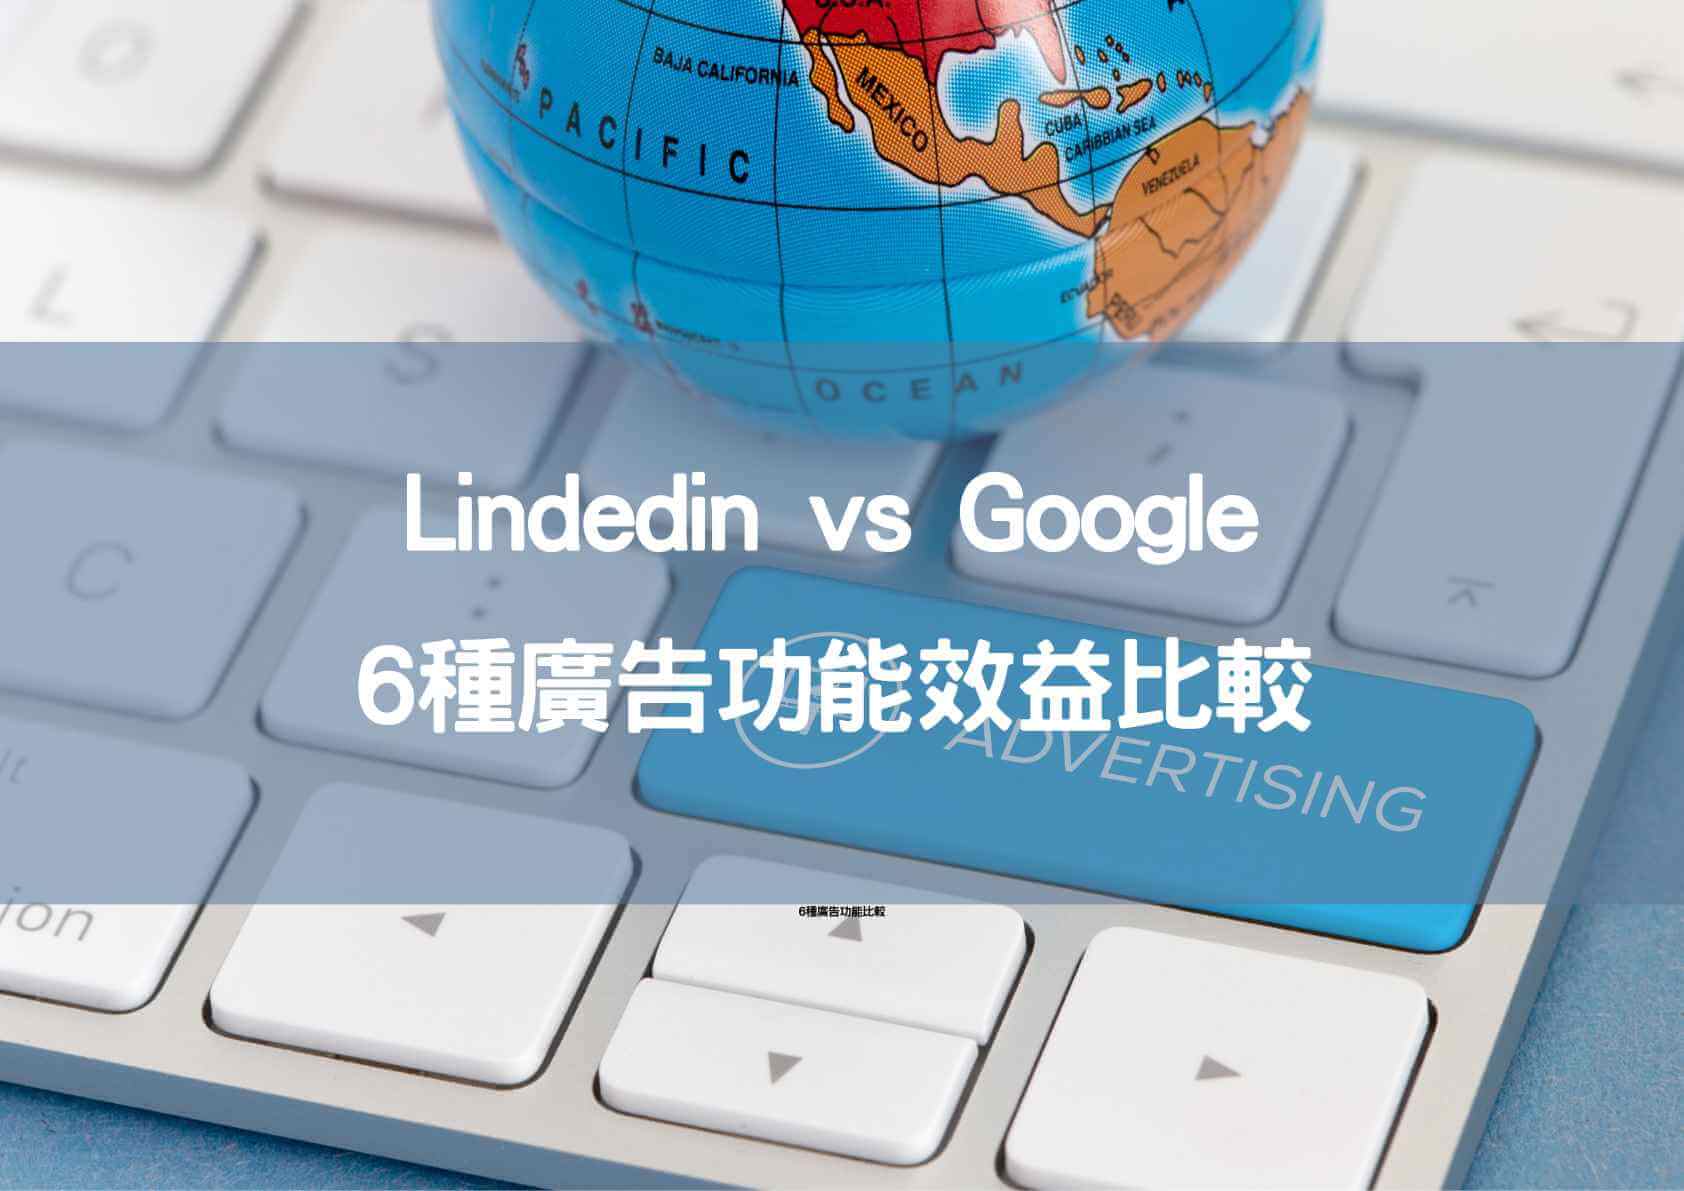 Lindedin廣告 vs Google廣告功能比較